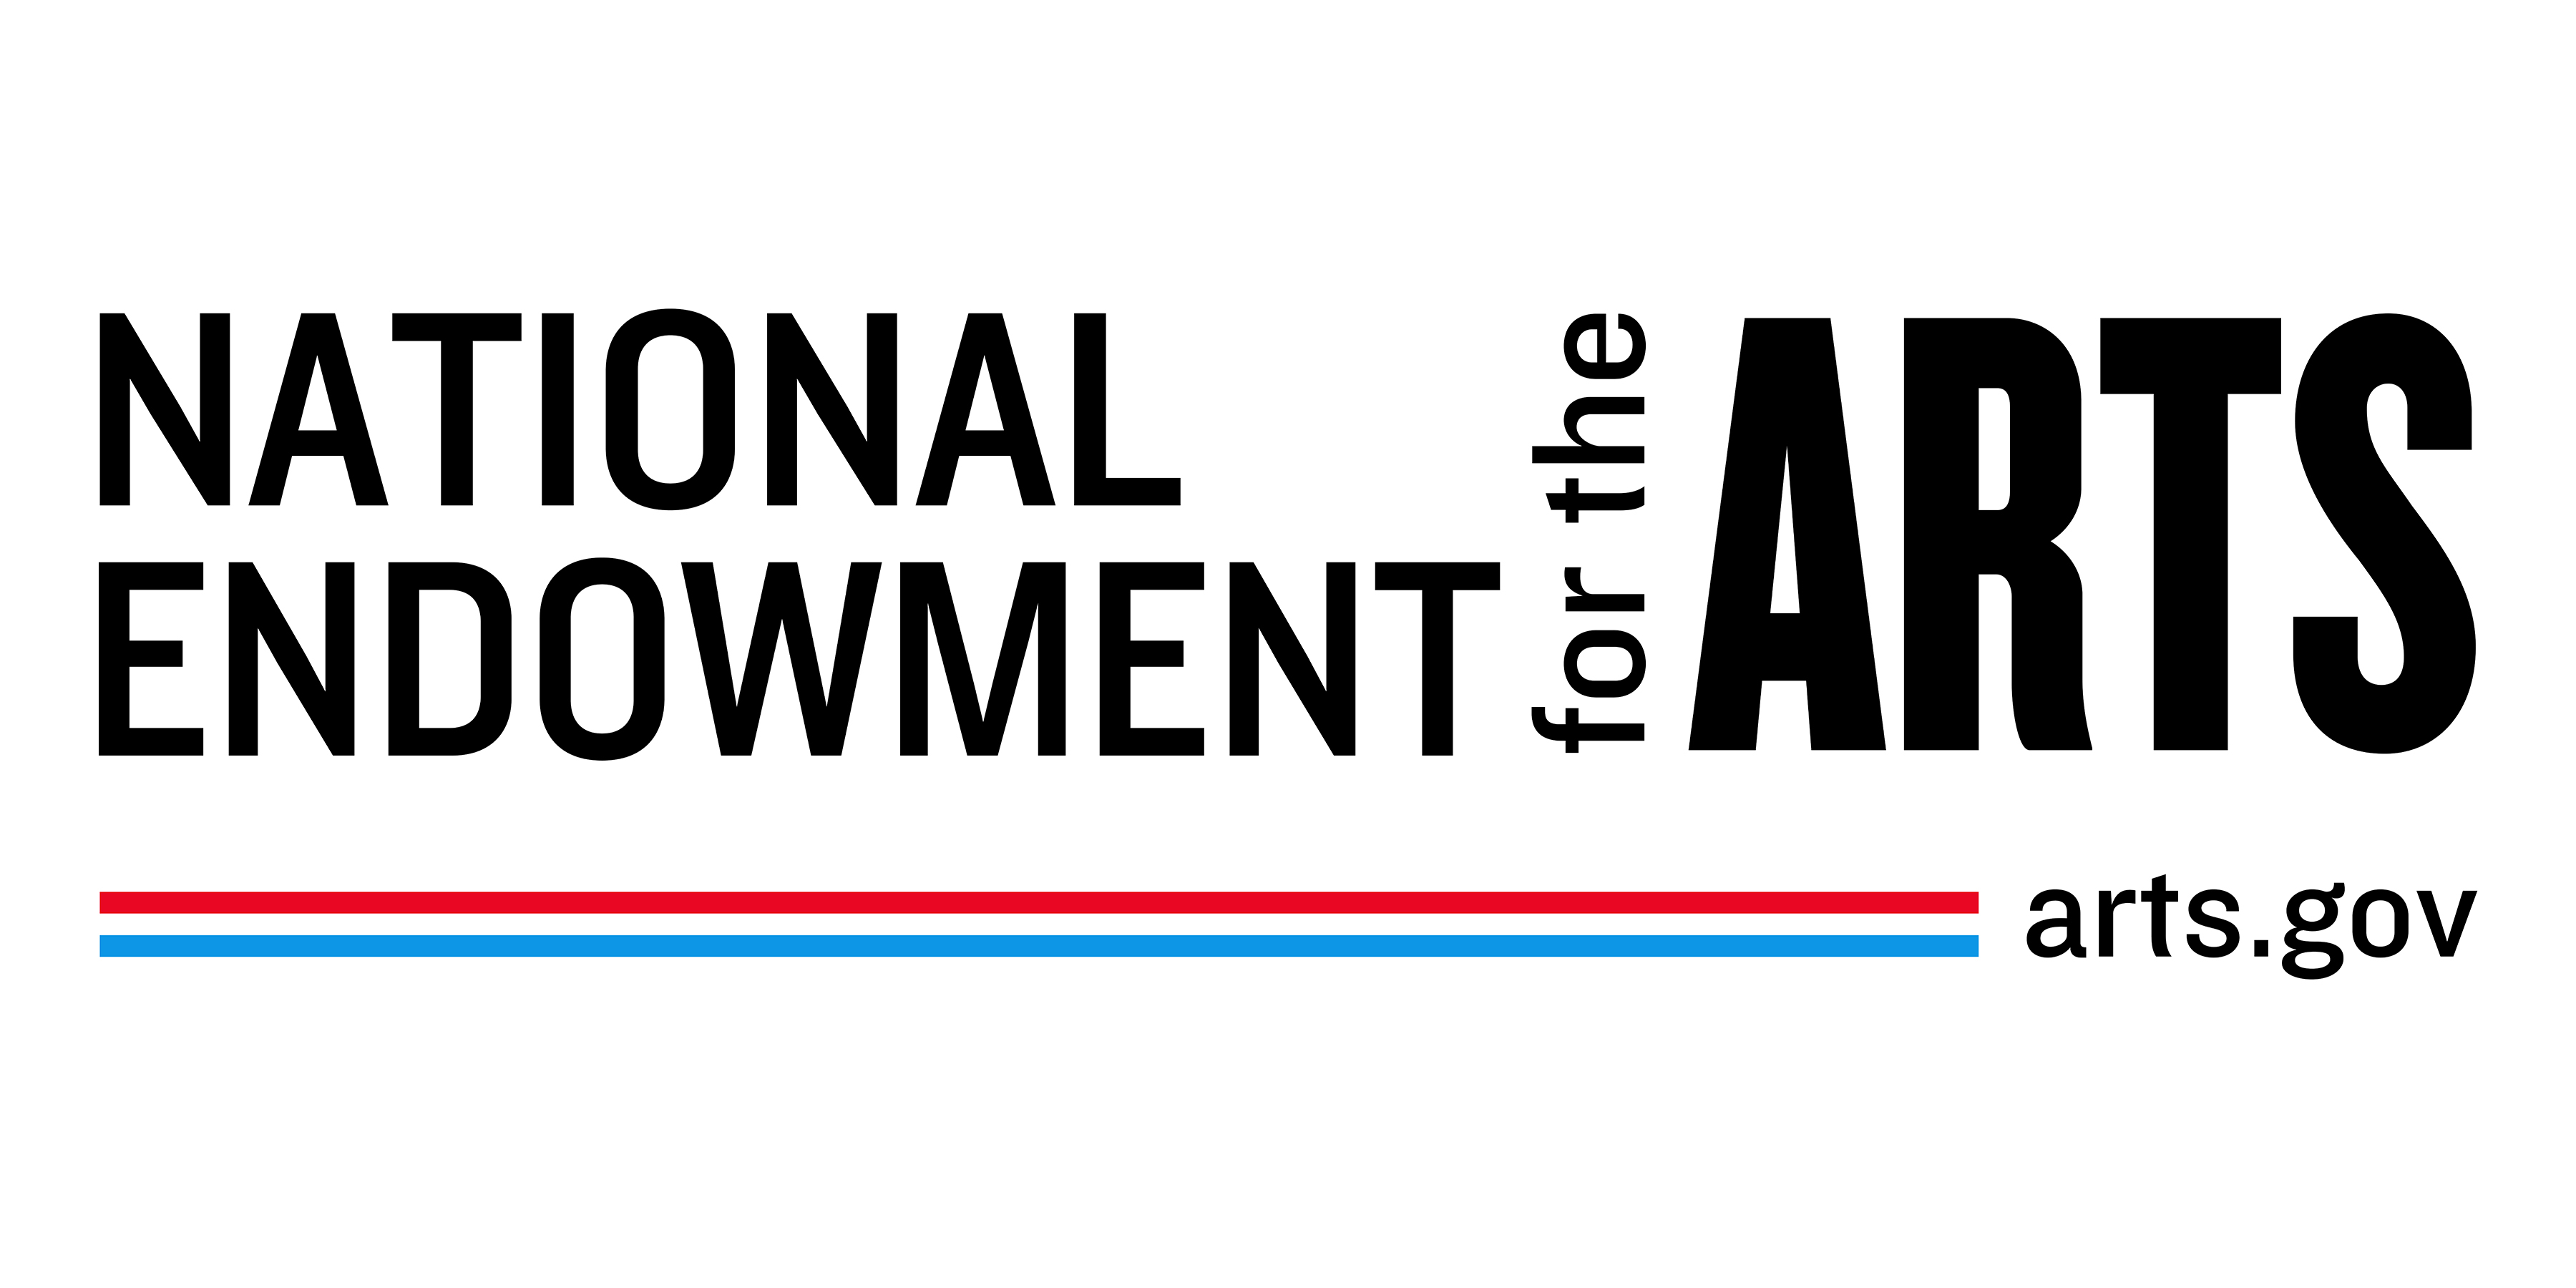 National Endowment for the Arts Logo white